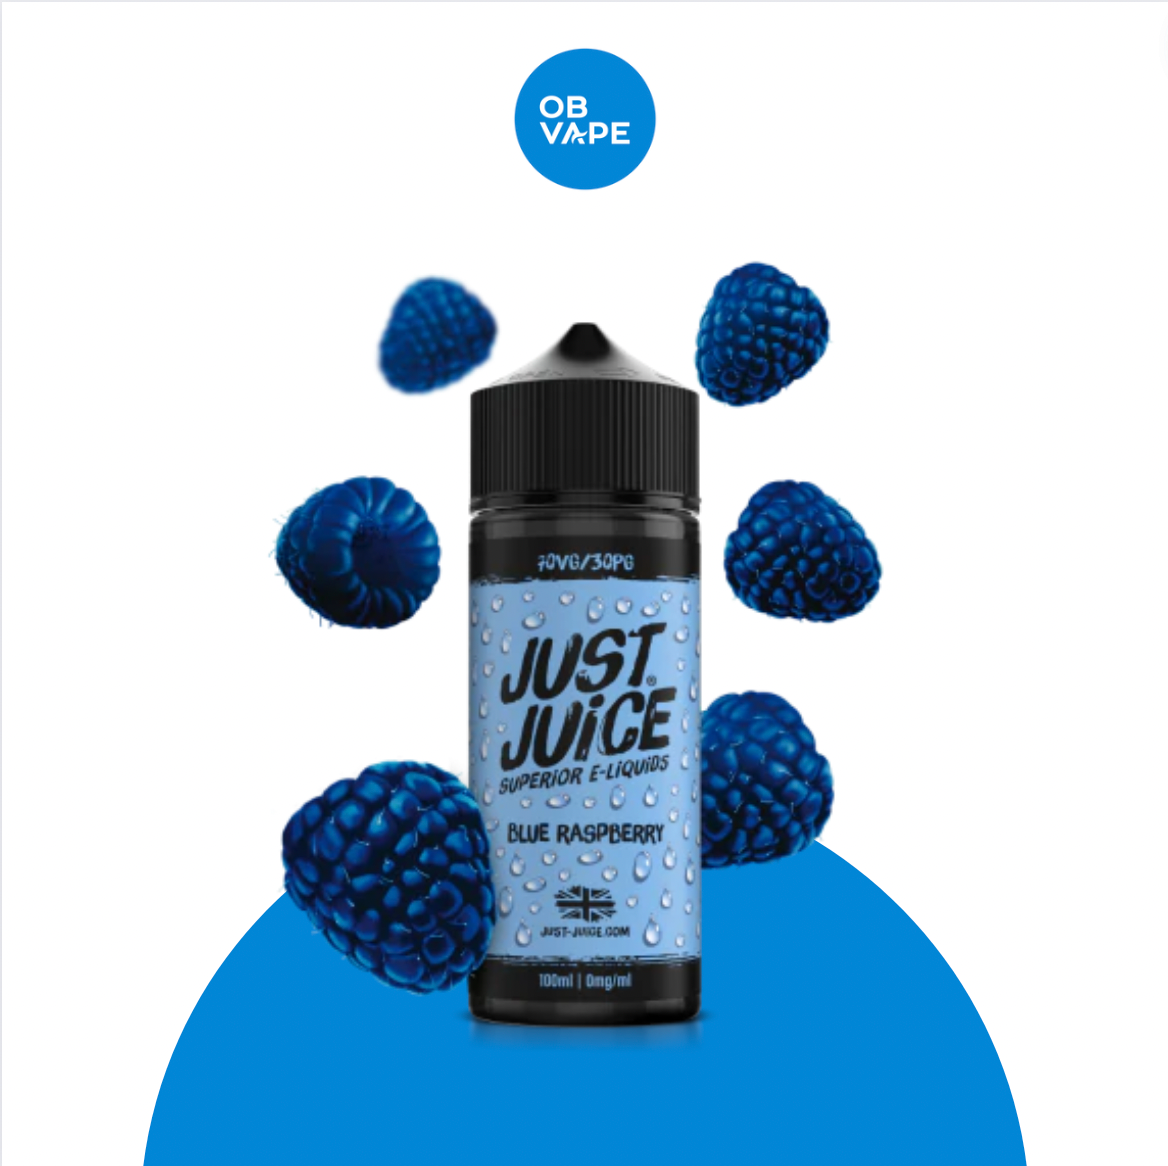 Blue Raspberry - Just Juice 100ml - OB Vape Shop Ireland | Free Next Day Delivery Over €50 | OB Vape Ireland's Premier Vape Shop | OB Bar Disposable Vape